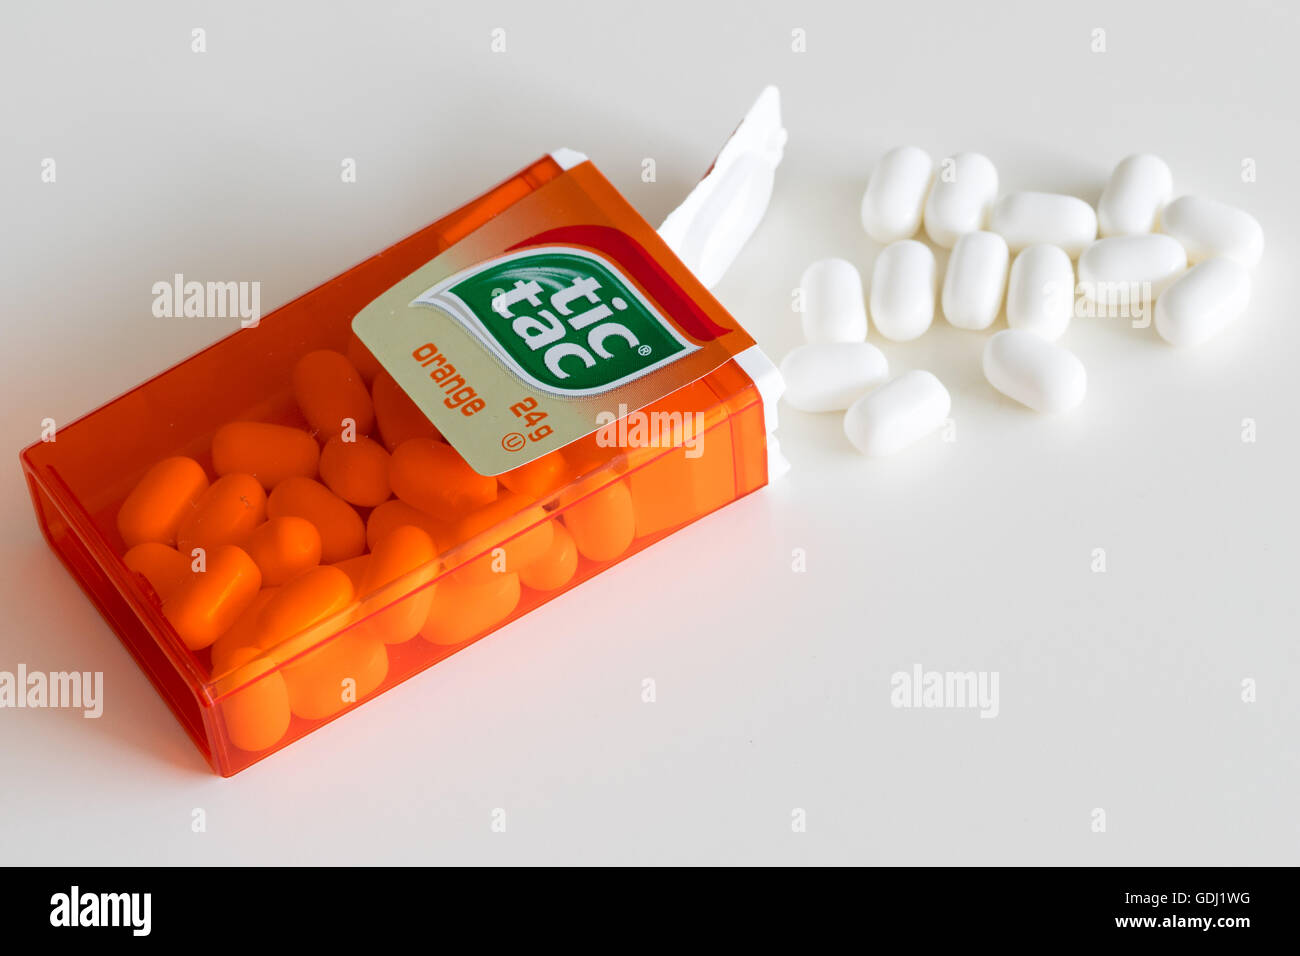 Ferrero Tic Tac Candy Original Orange Flavour And Canadian Stock Photo Alamy